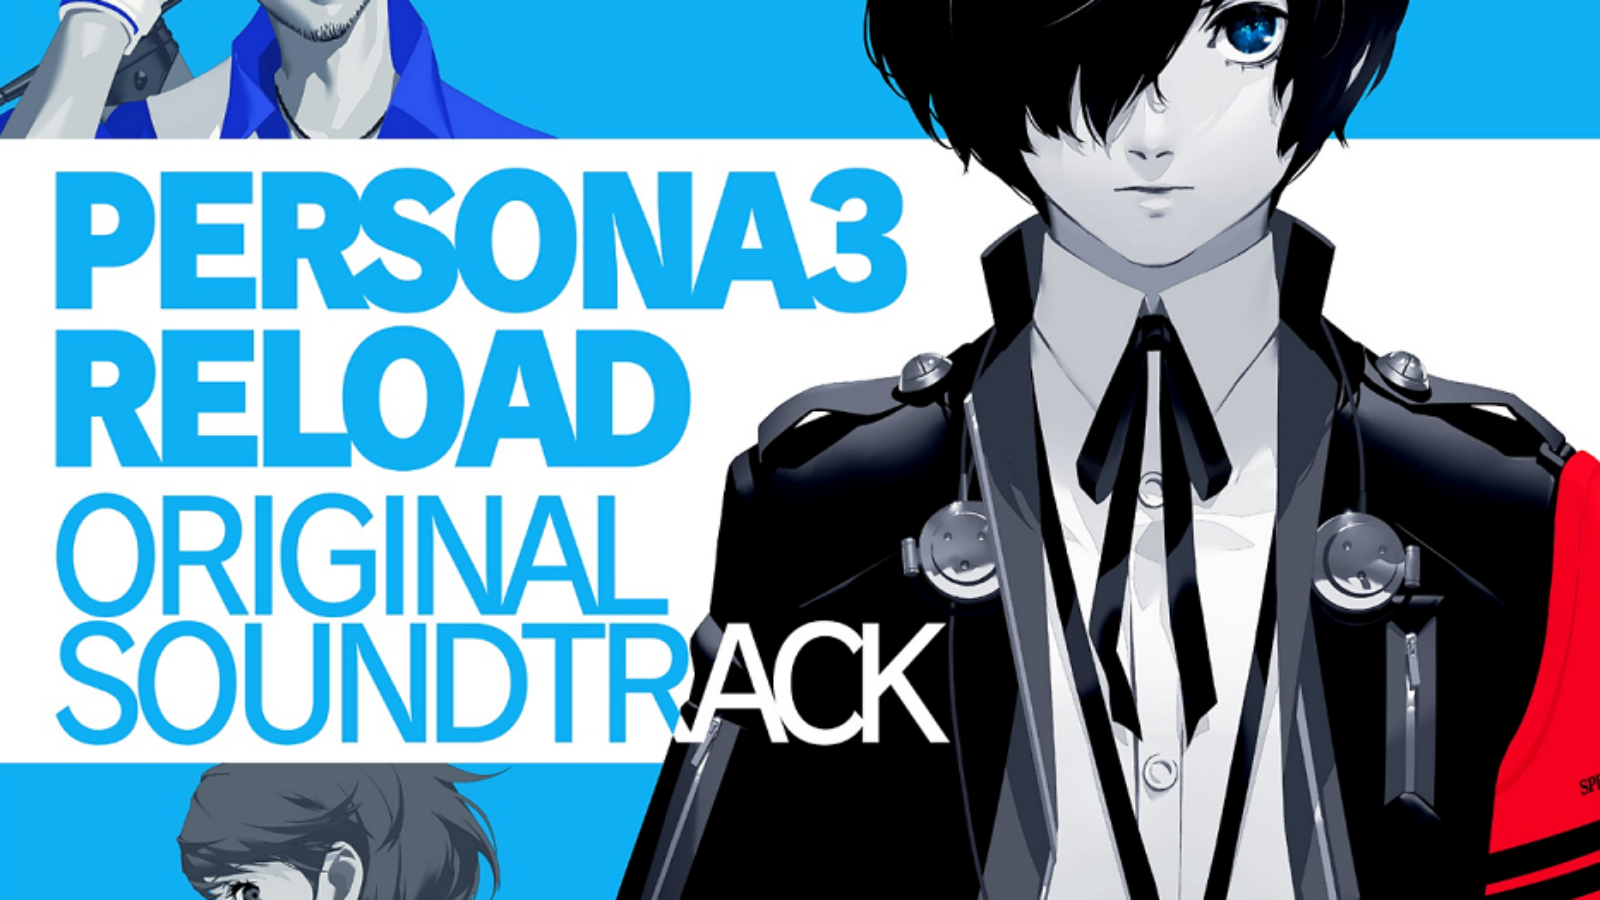 Persona 3 Reload Original Soundtrack (Album)